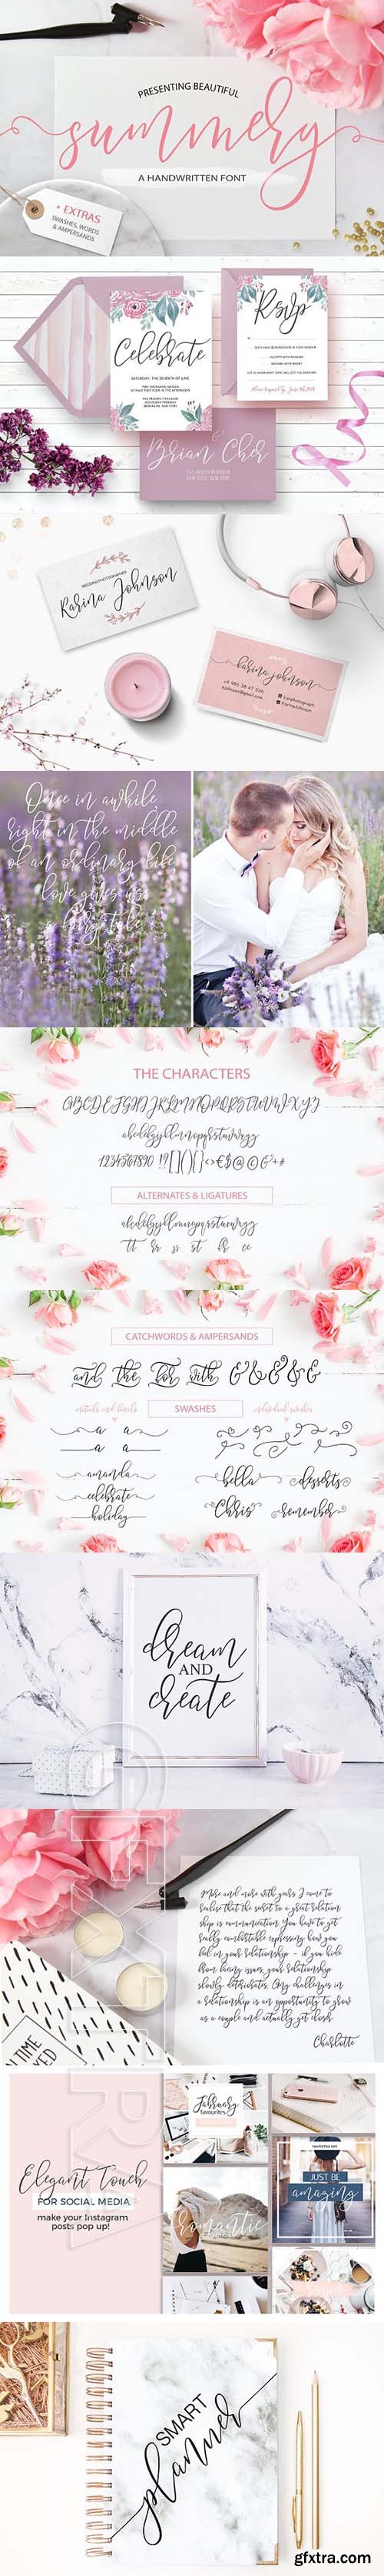 CreativeMarket - Summery Handwritten Calligraphy Font 1934475